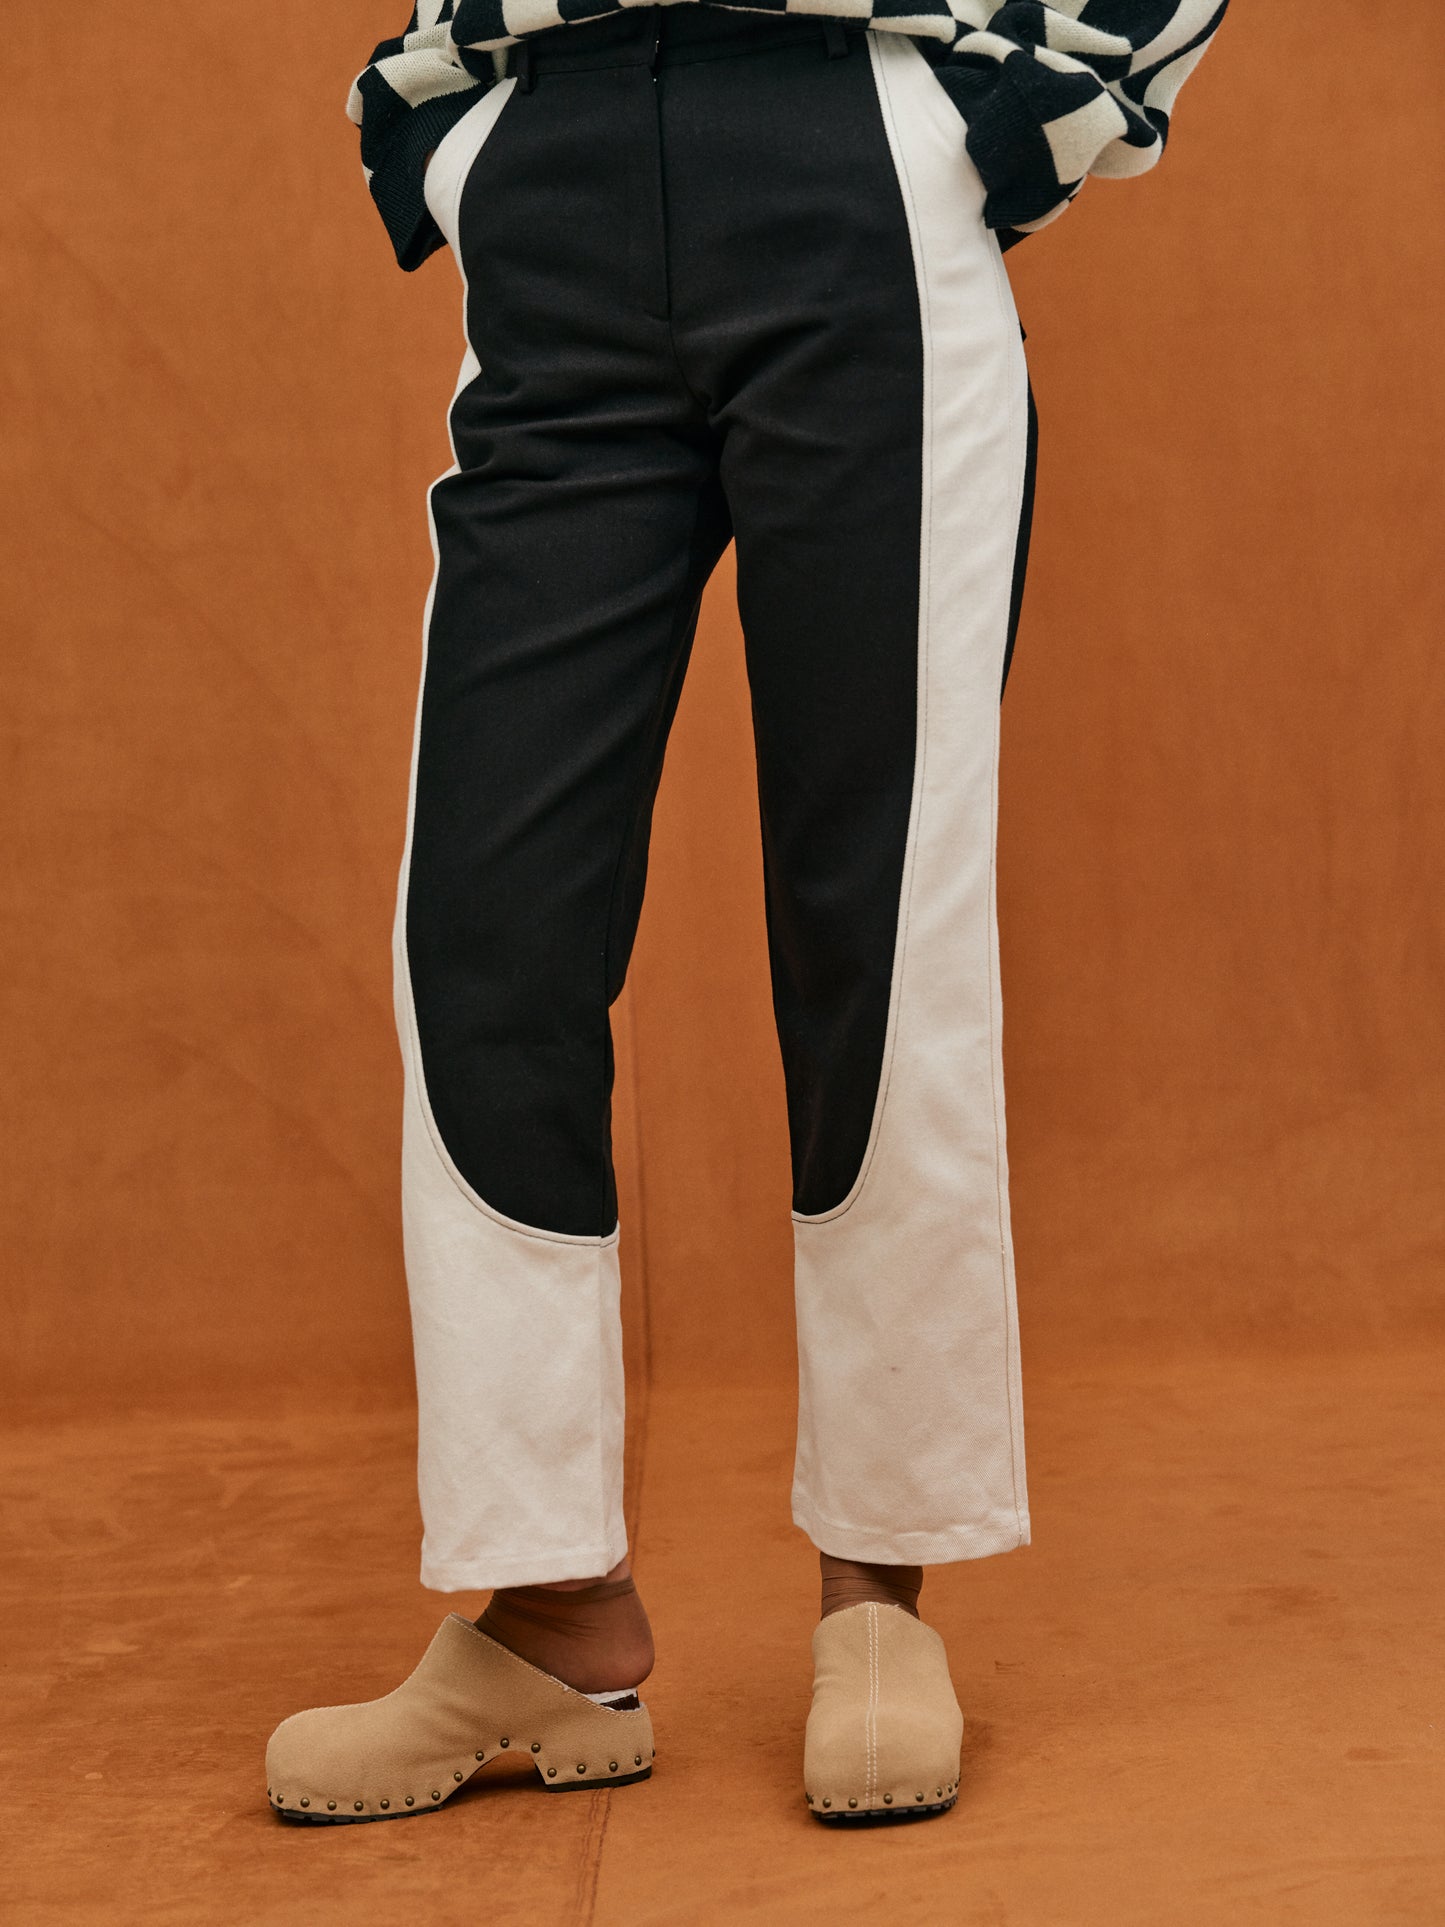 Colorblock Pants, Ivory & Black